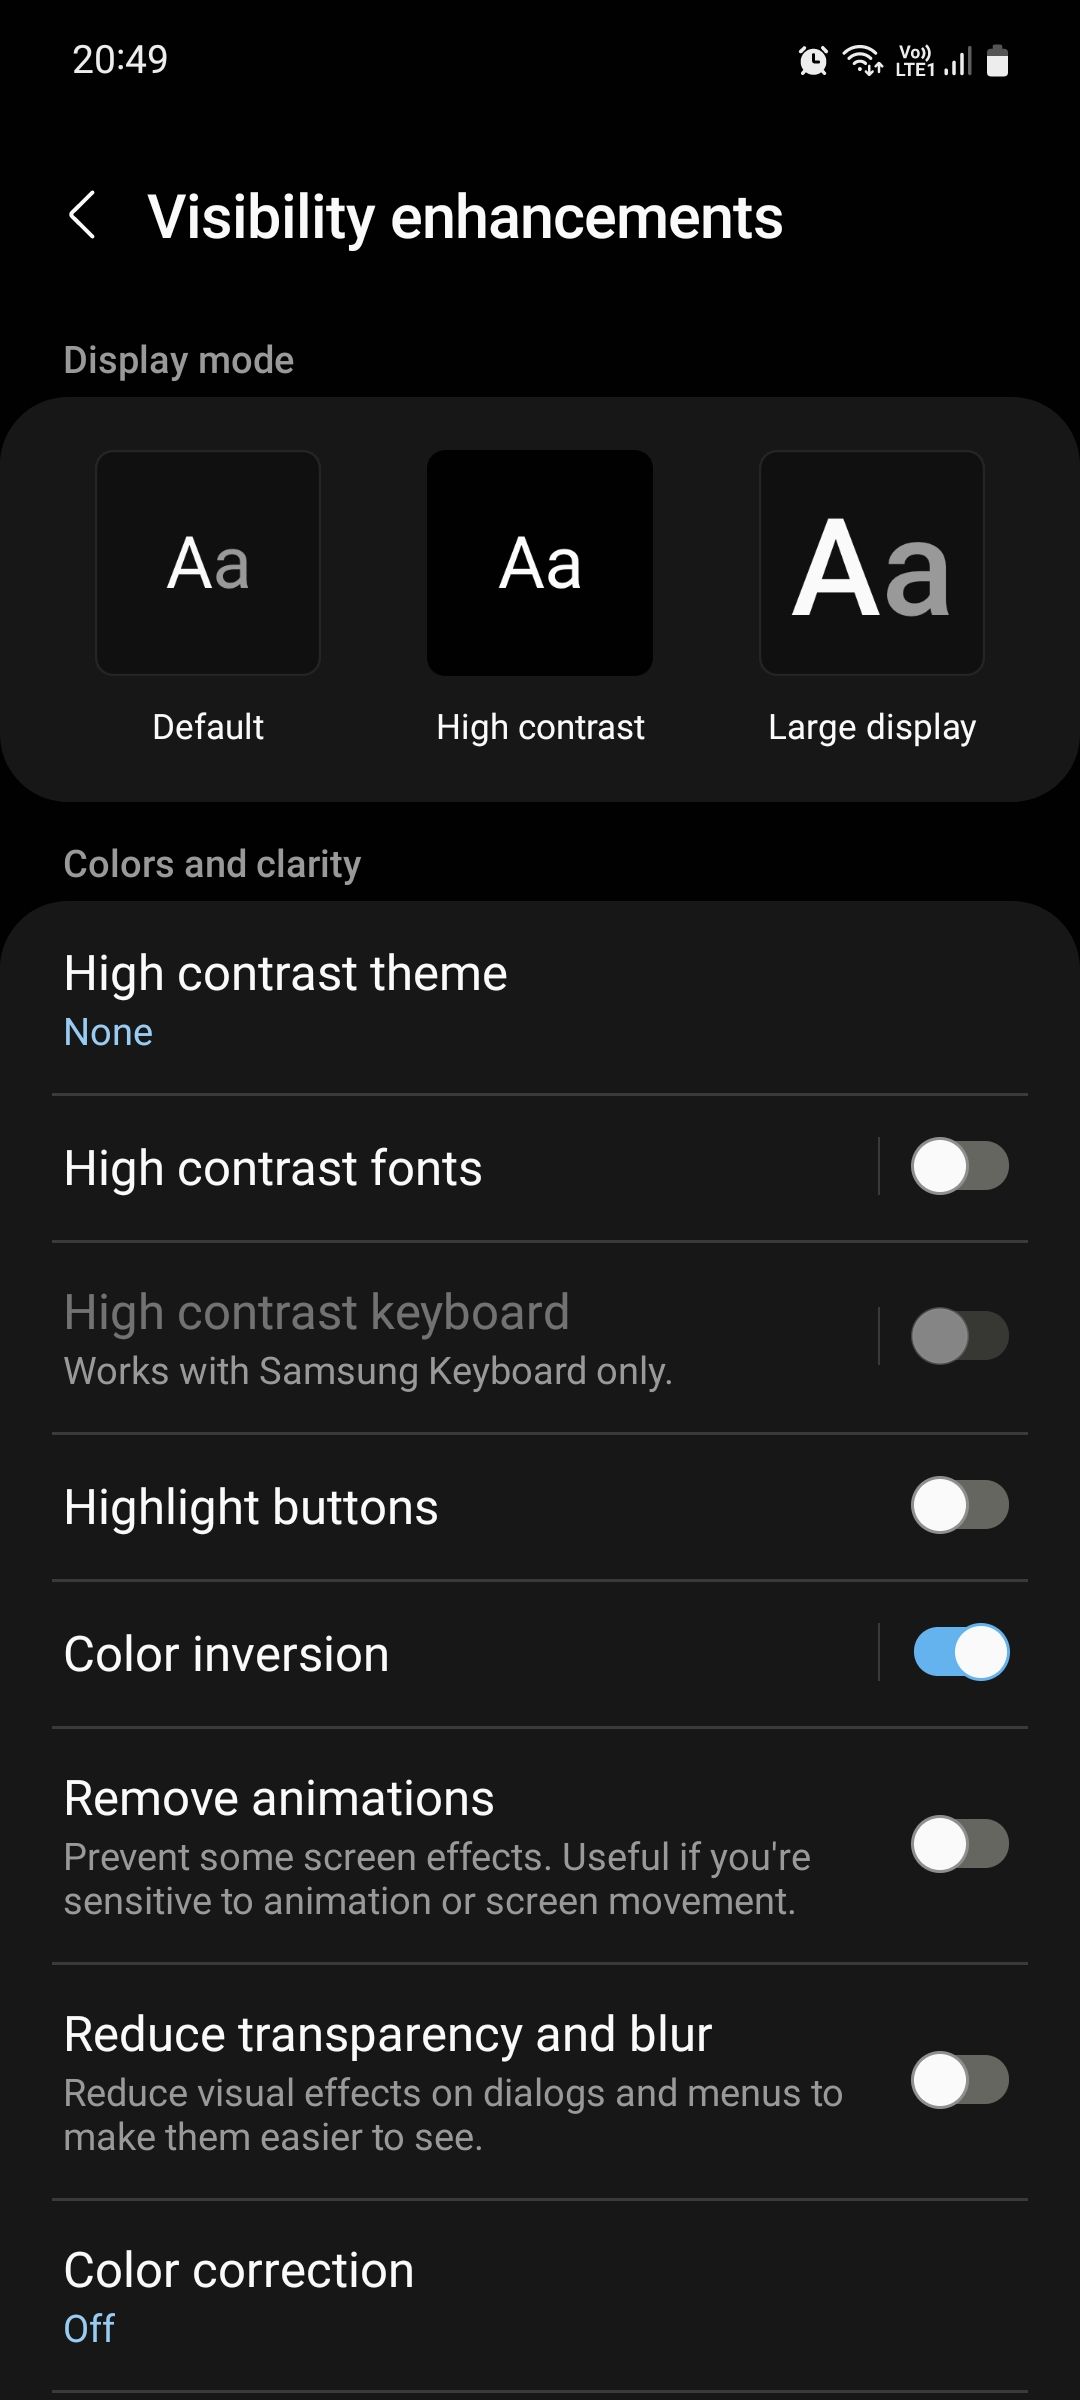 Samsung Accessibility Visibility enhancements menu